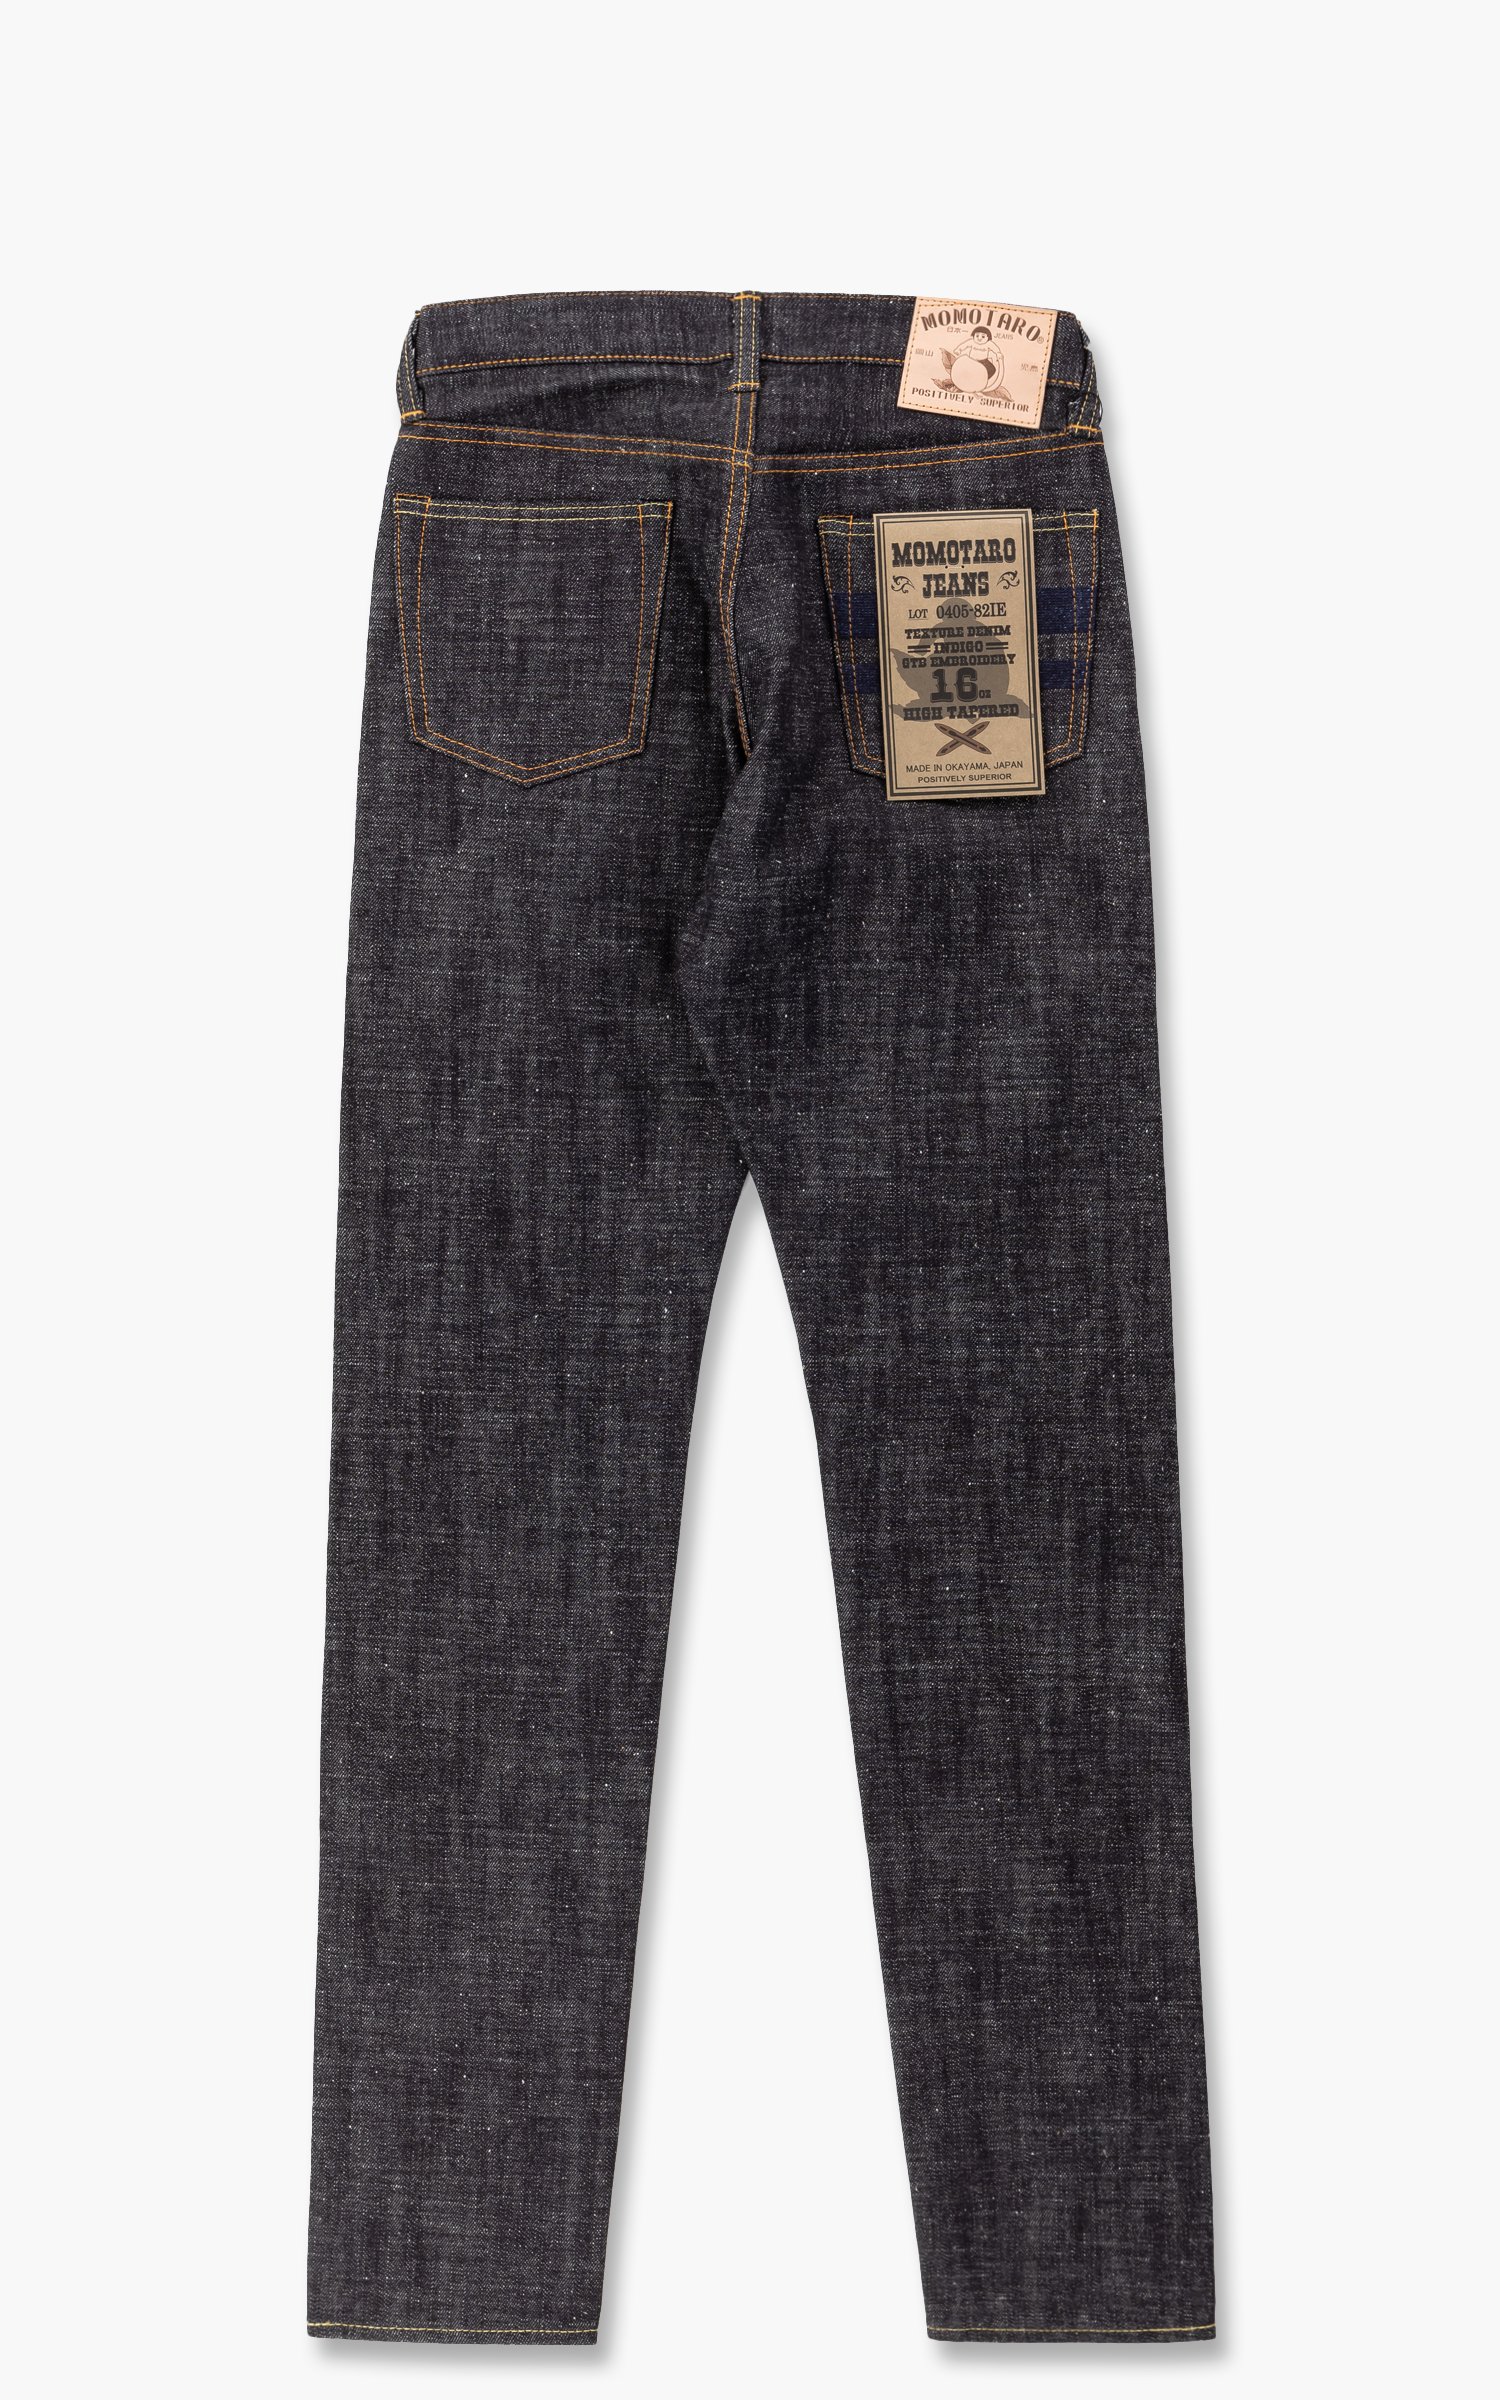 Momotaro Jeans 0405-82IE Indigo Selvedge Texture Denim GTB Embroidery ...